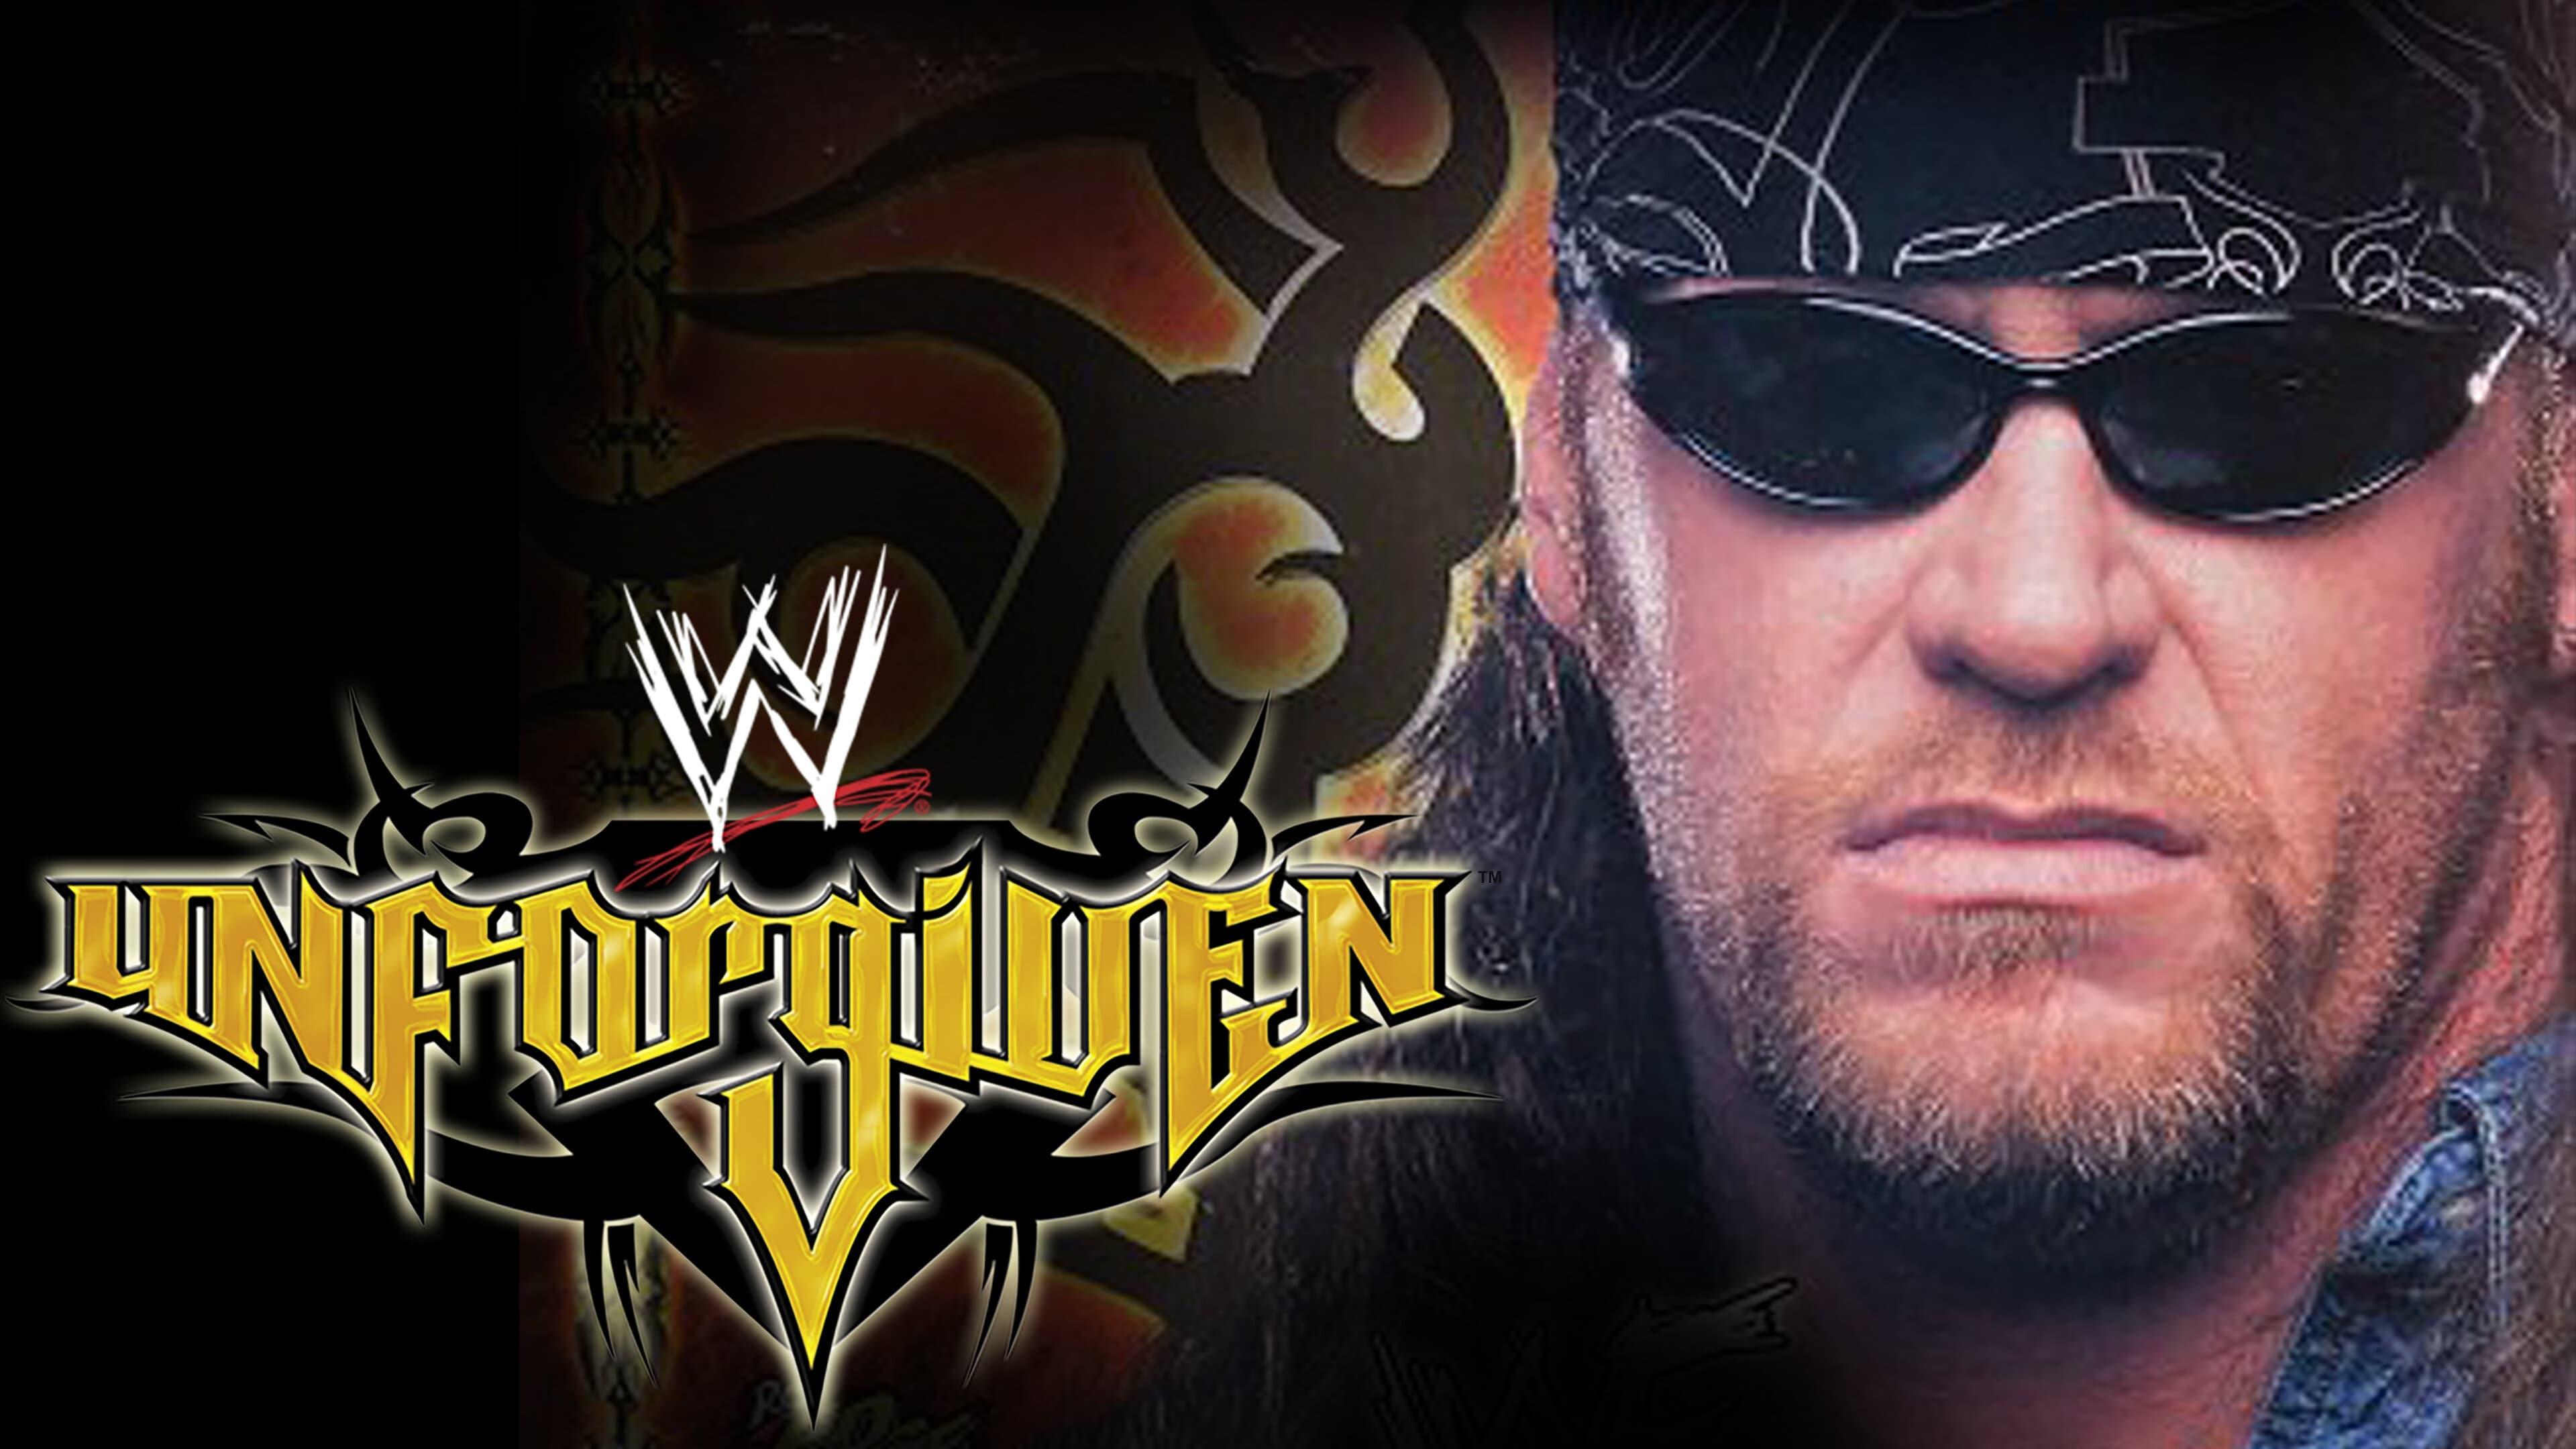 WWE Unforgiven 2000 backdrop